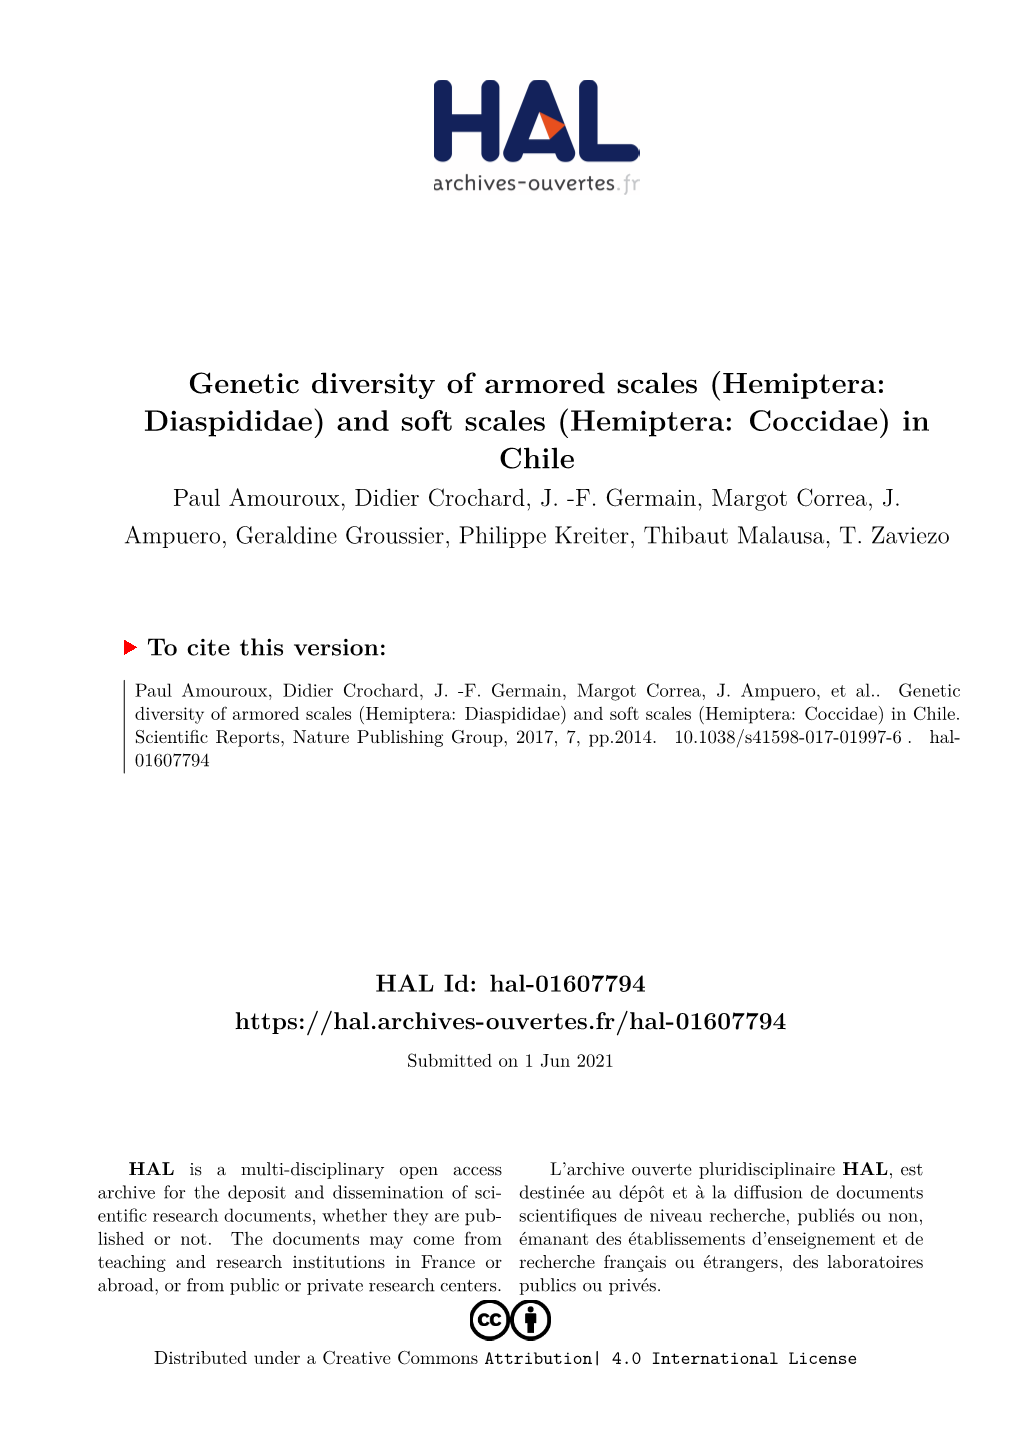 Hemiptera: Diaspididae) and Soft Scales (Hemiptera: Coccidae) in Chile Paul Amouroux, Didier Crochard, J